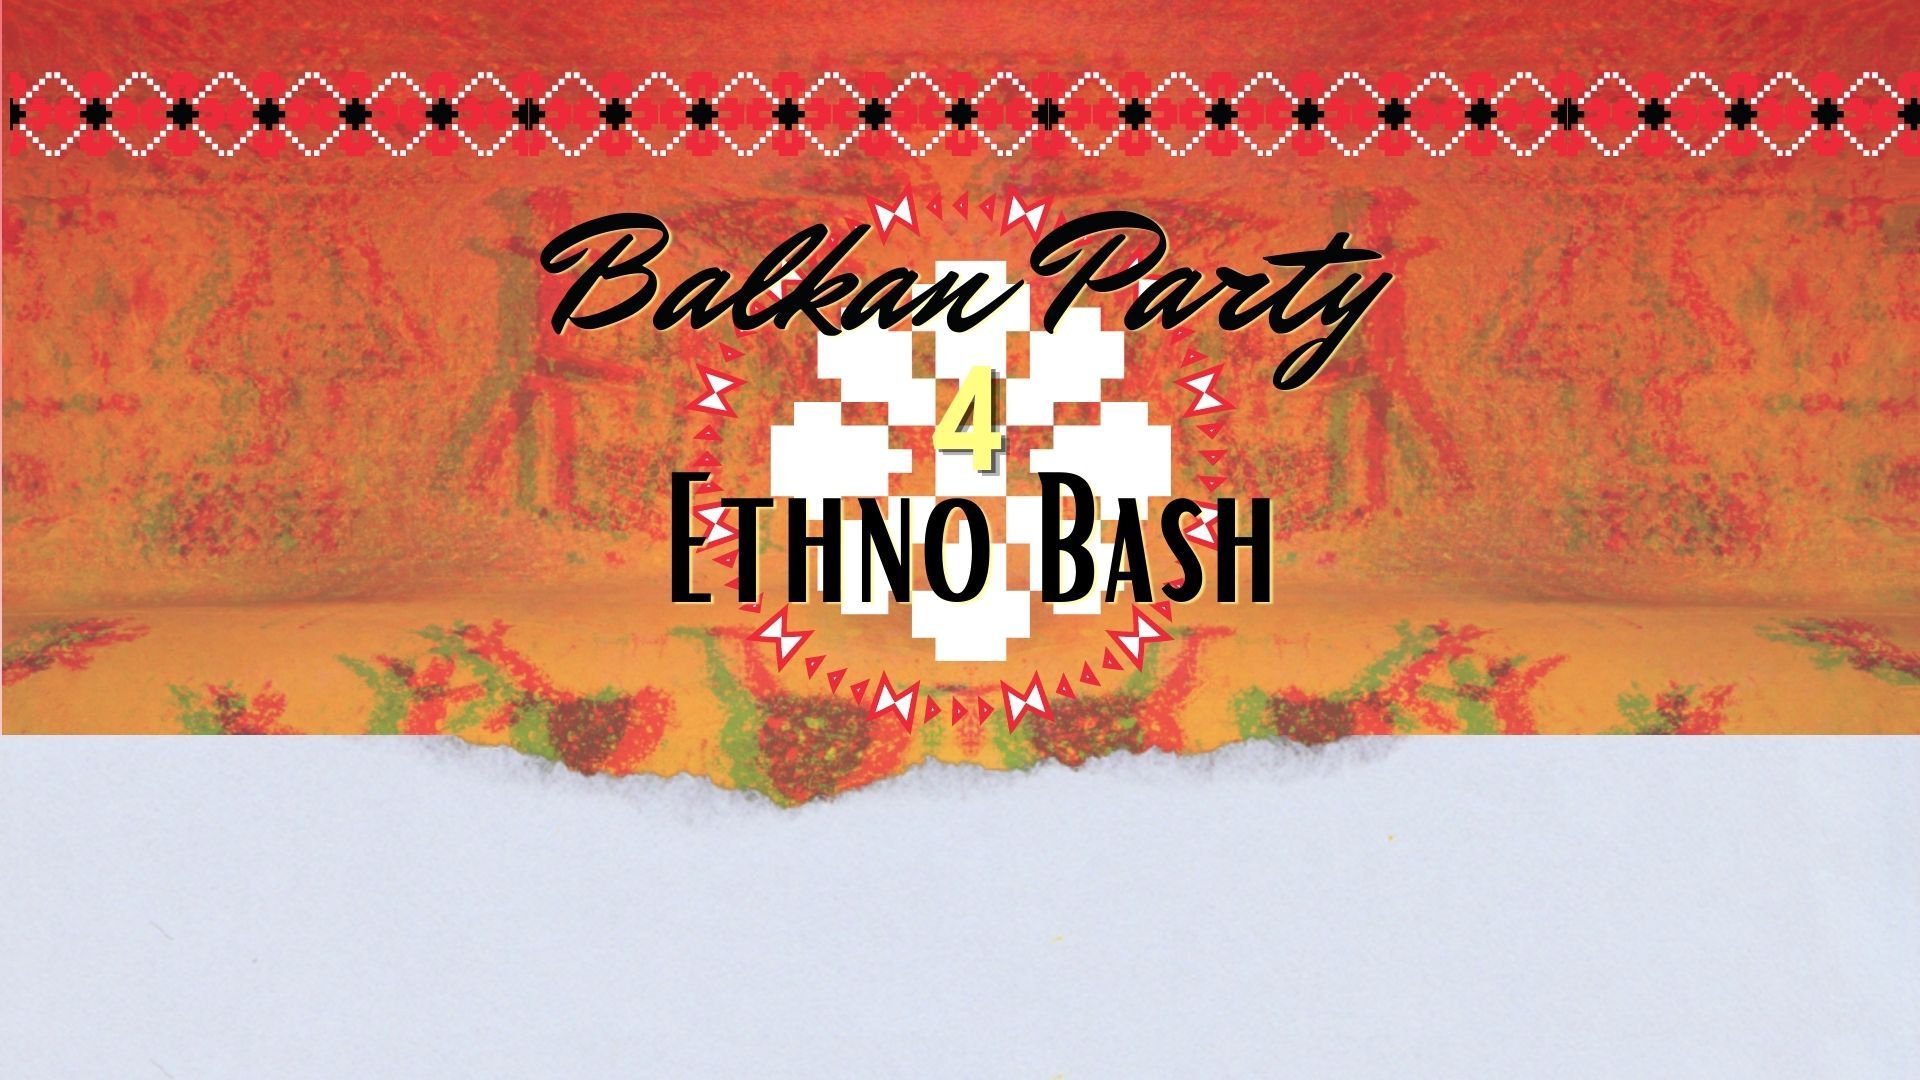 Balkan Party 4 Ethno Bash header